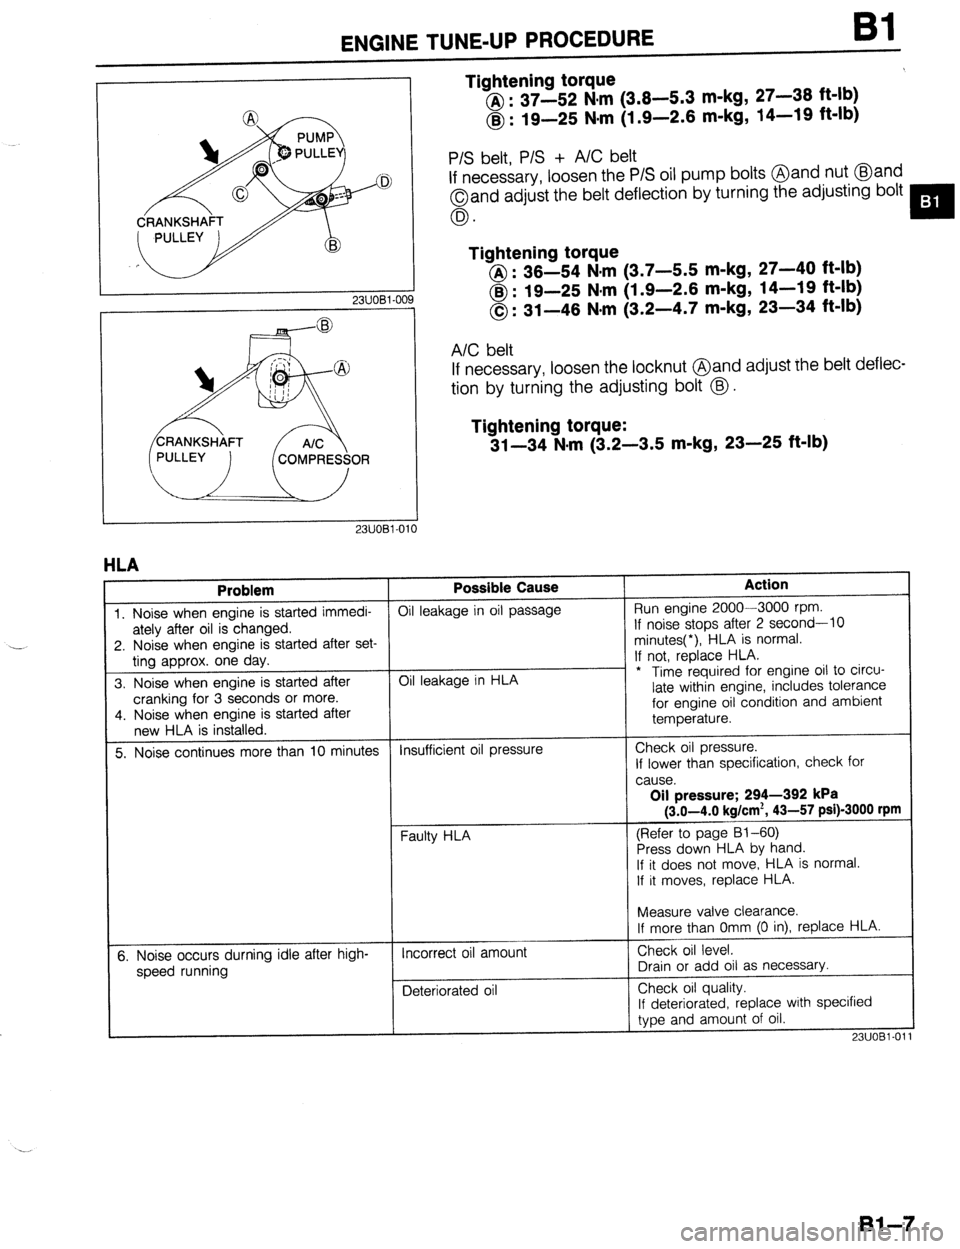 MAZDA PROTEGE 1992  Workshop Manual ENGINE TUNE-UP PROCEDURE Bl 
Tightening torque 
@ : 37-52 N,m (3.8-5.3 m-kg, 27-38 ft-lb) 
@ : 19-25 Nsm (1.9-2.6 m-kg, 14-19 ft-lb) 
23UOBl-OC 
P/S belt, P/S + A/C belt 
If necessary, loosen the P/S 